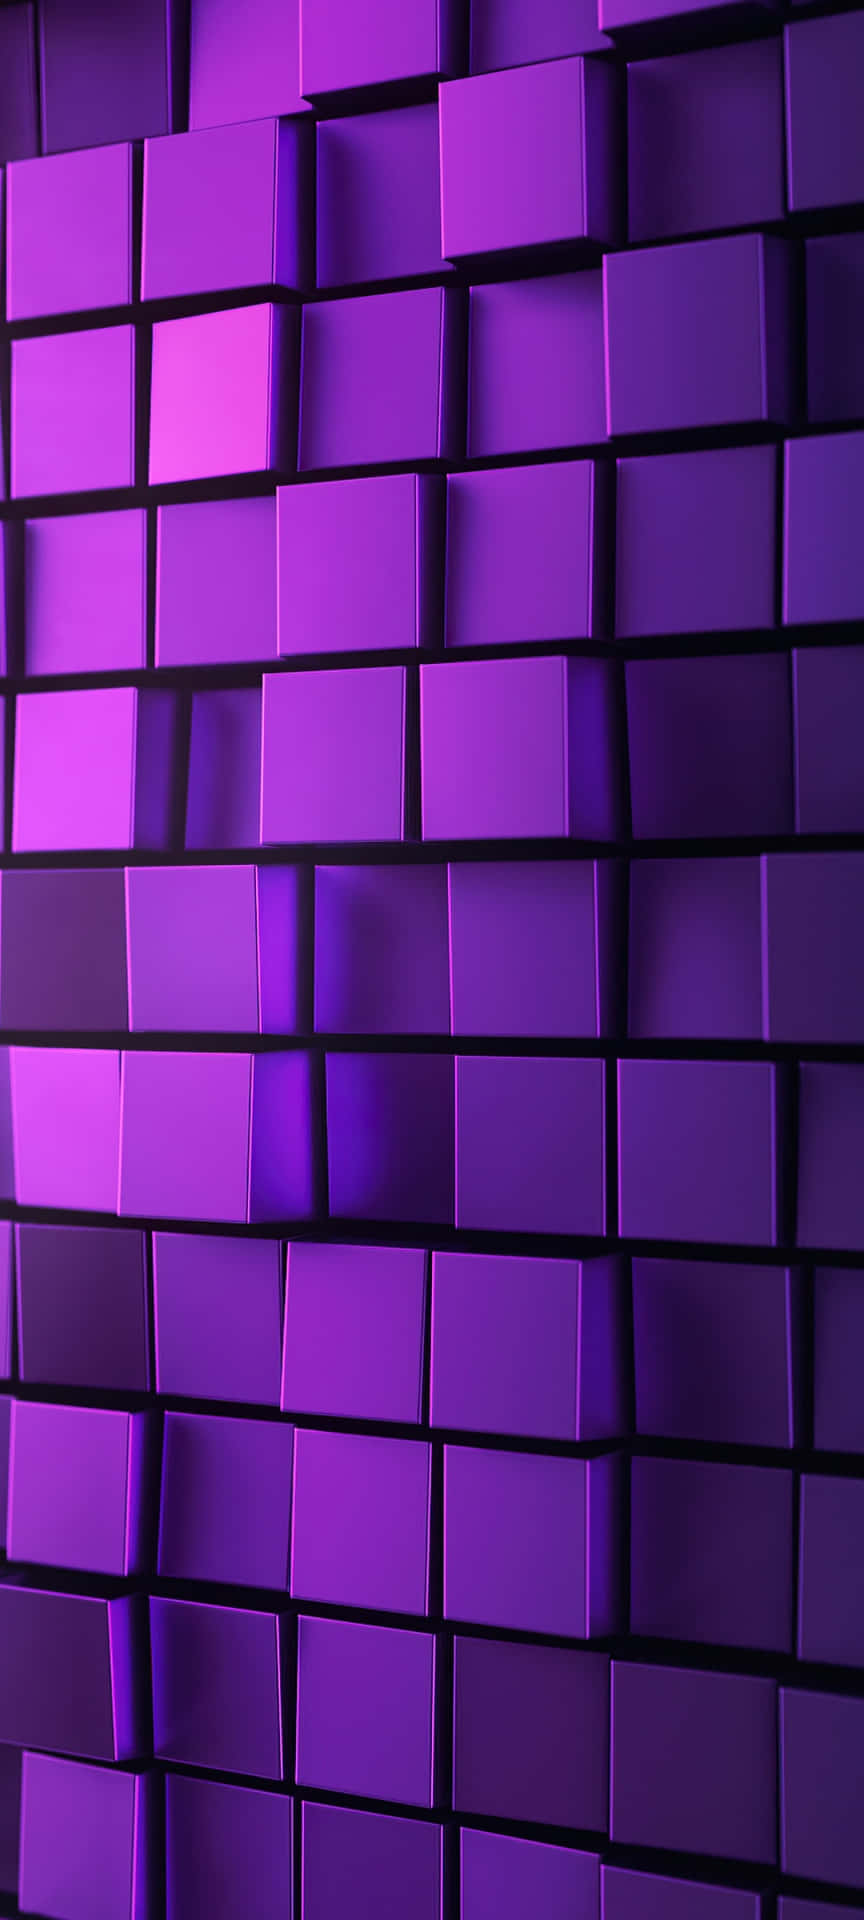 Super Cool 3d Purple Square Blocks Background